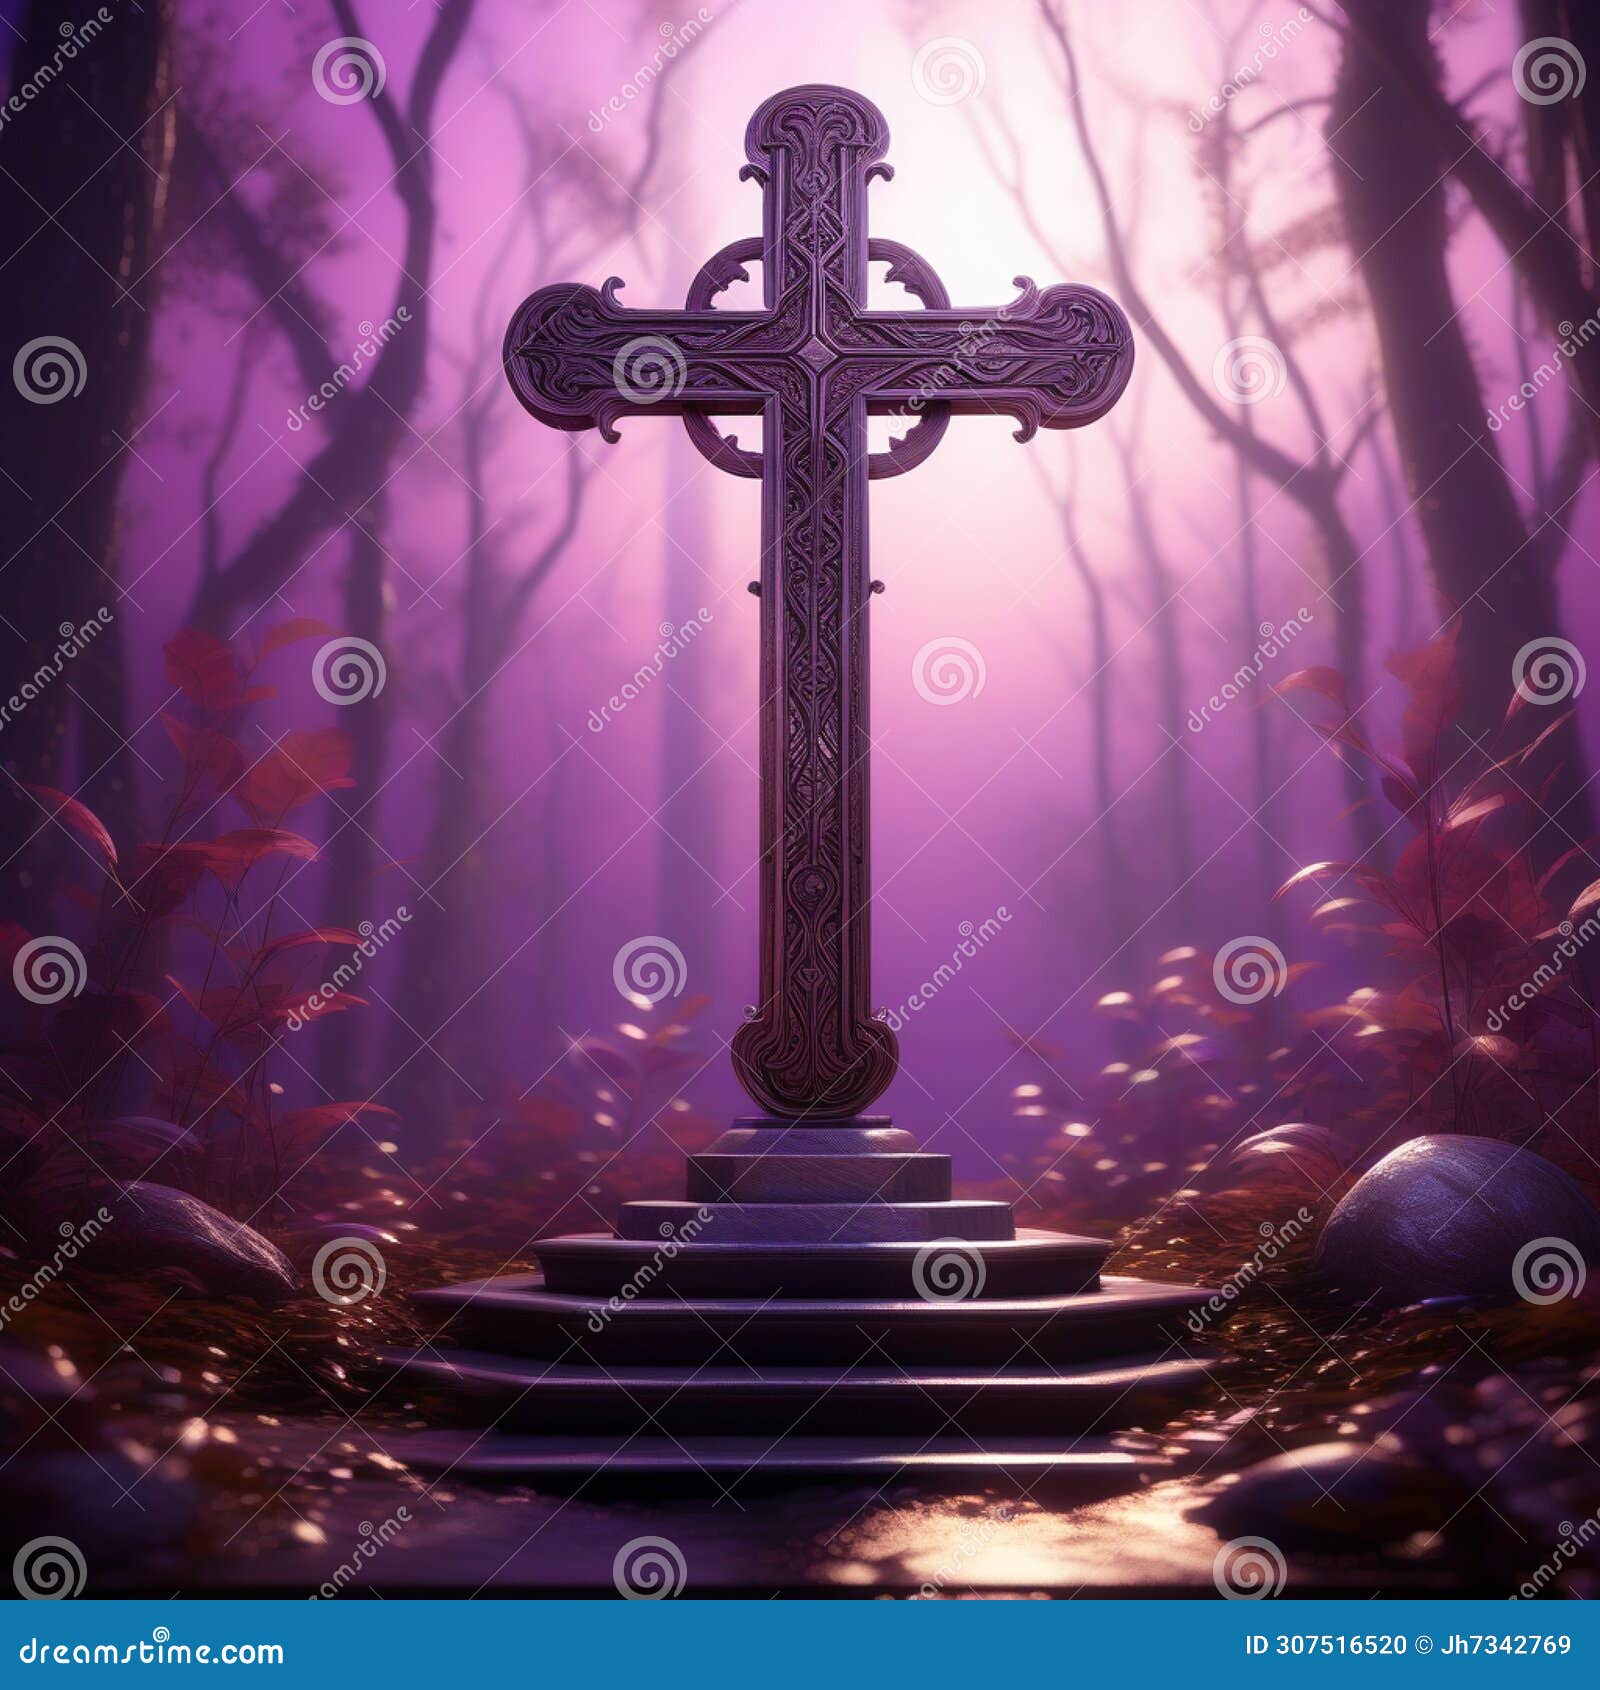 a wooden cross on a purple background